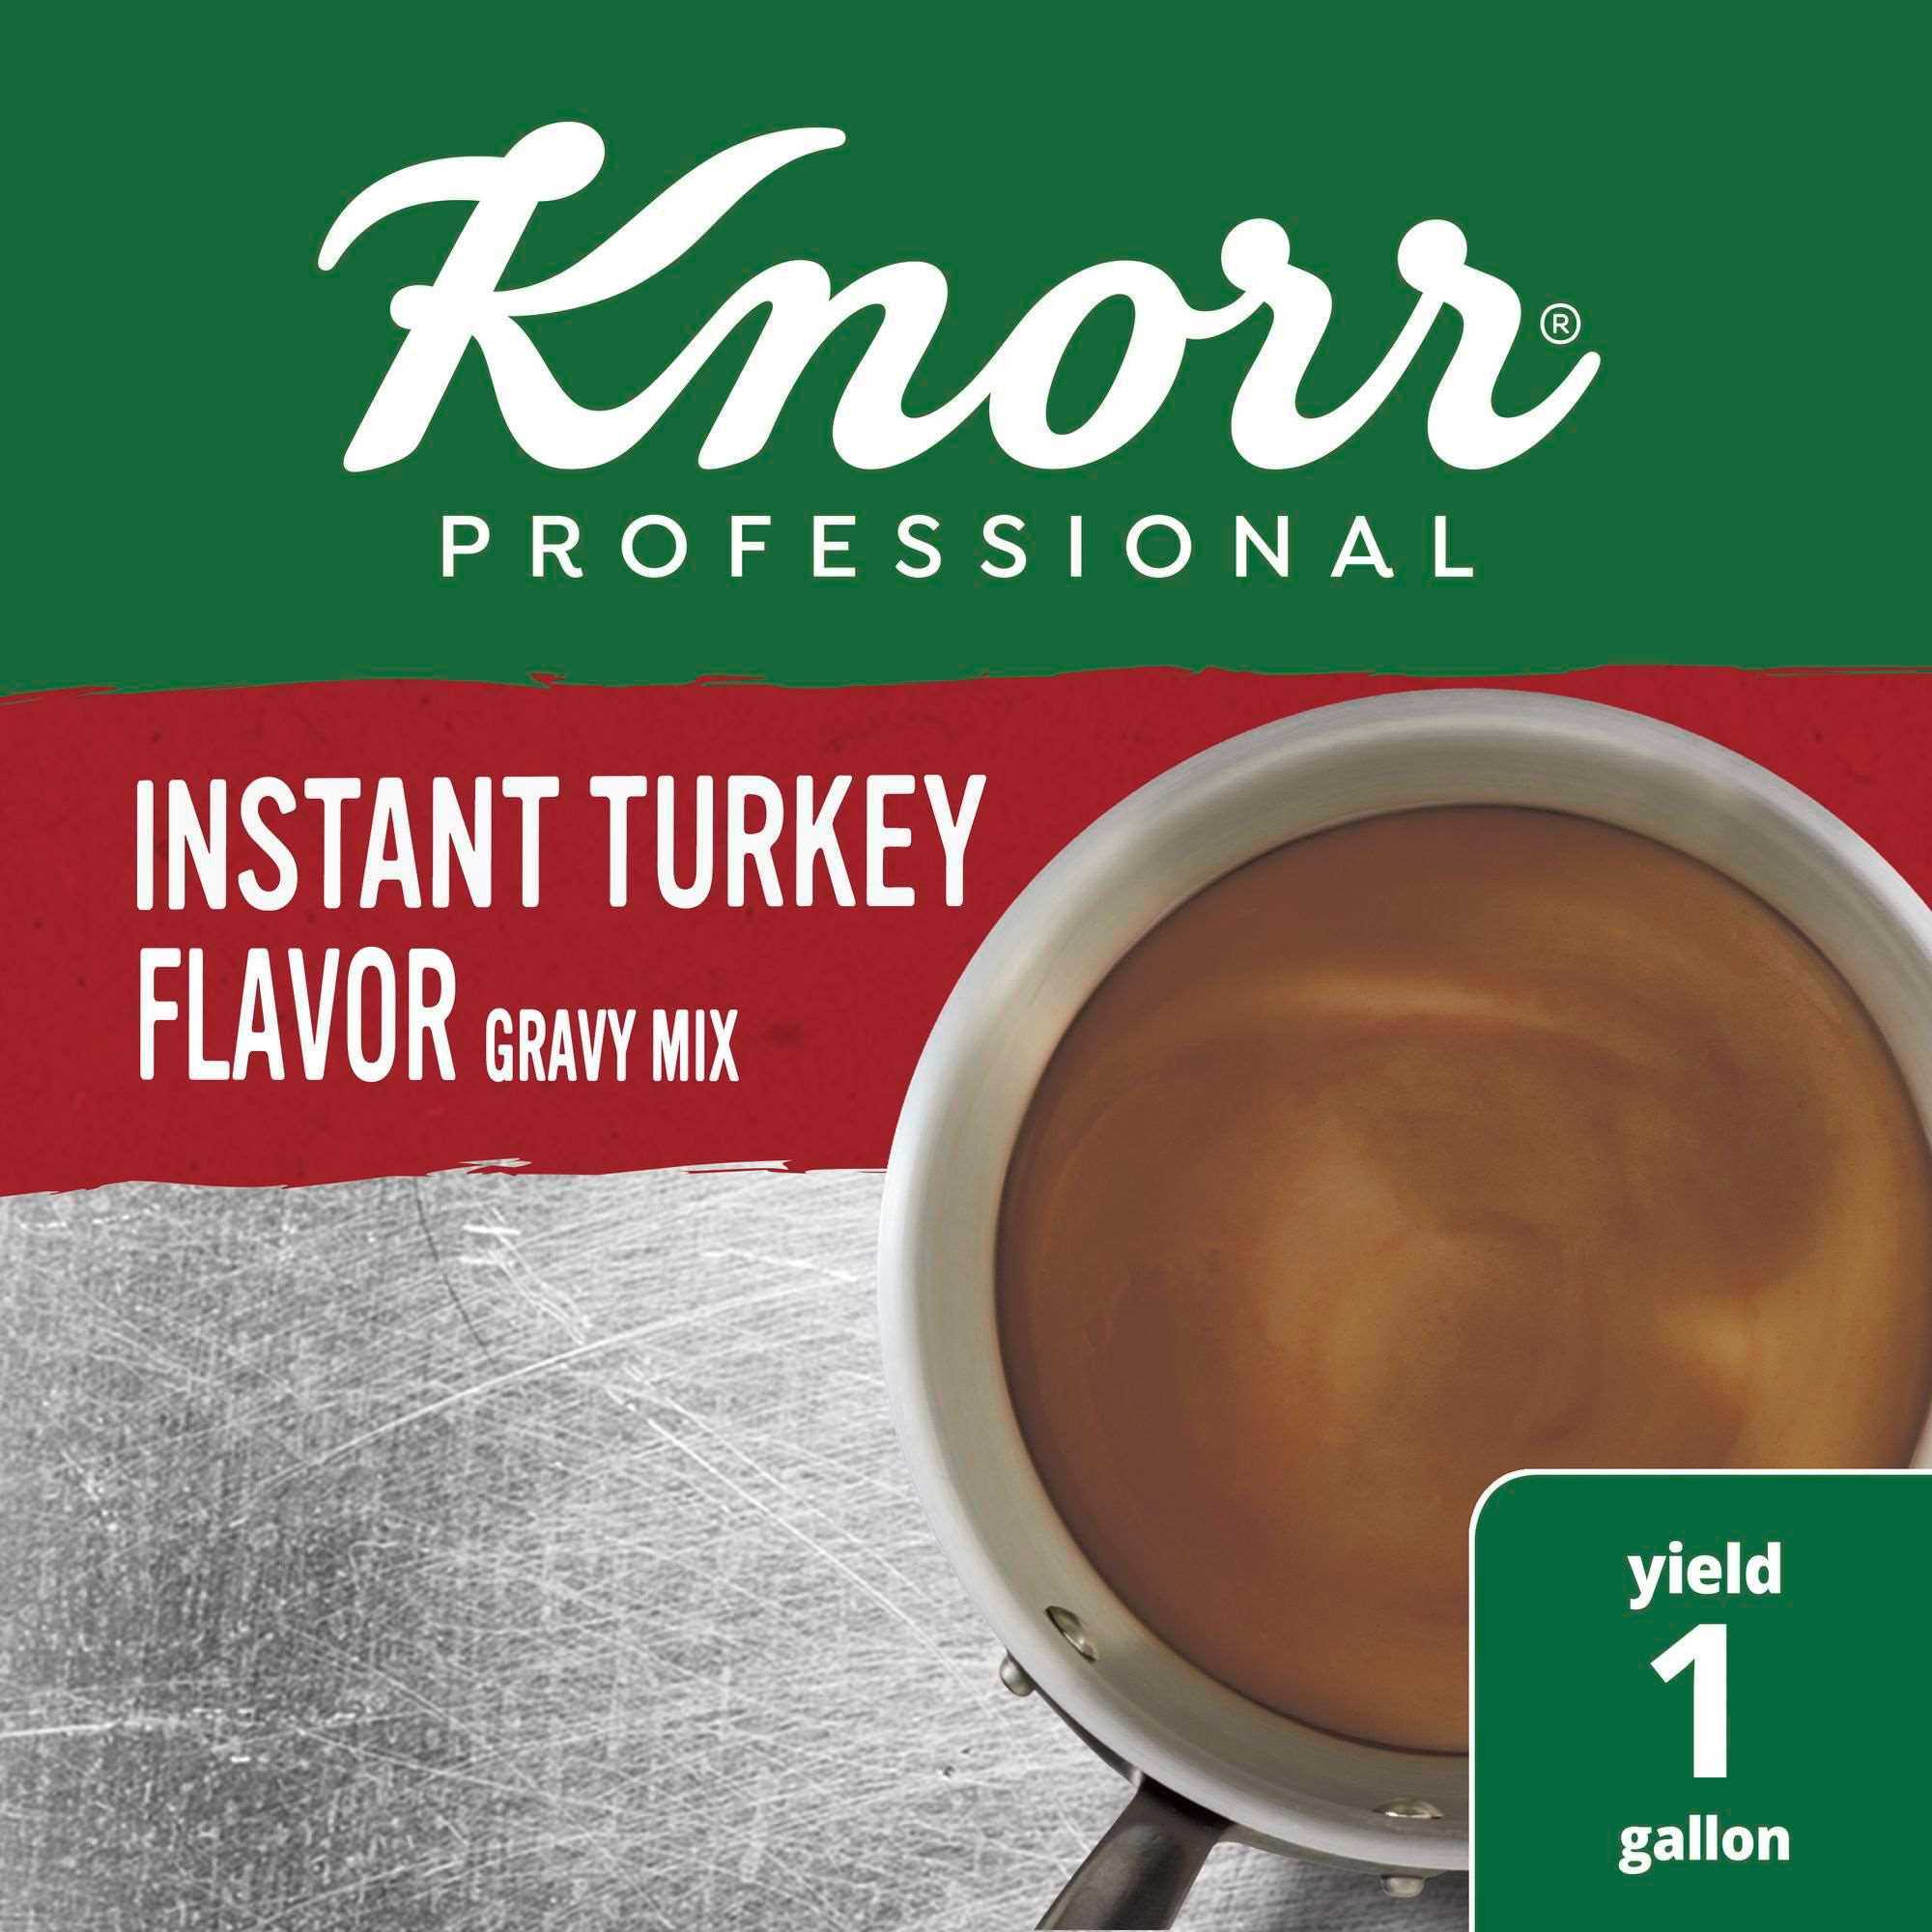 Knorr Professional Instant Turkey Gravy Mix, 1 Pound -- 6 per case